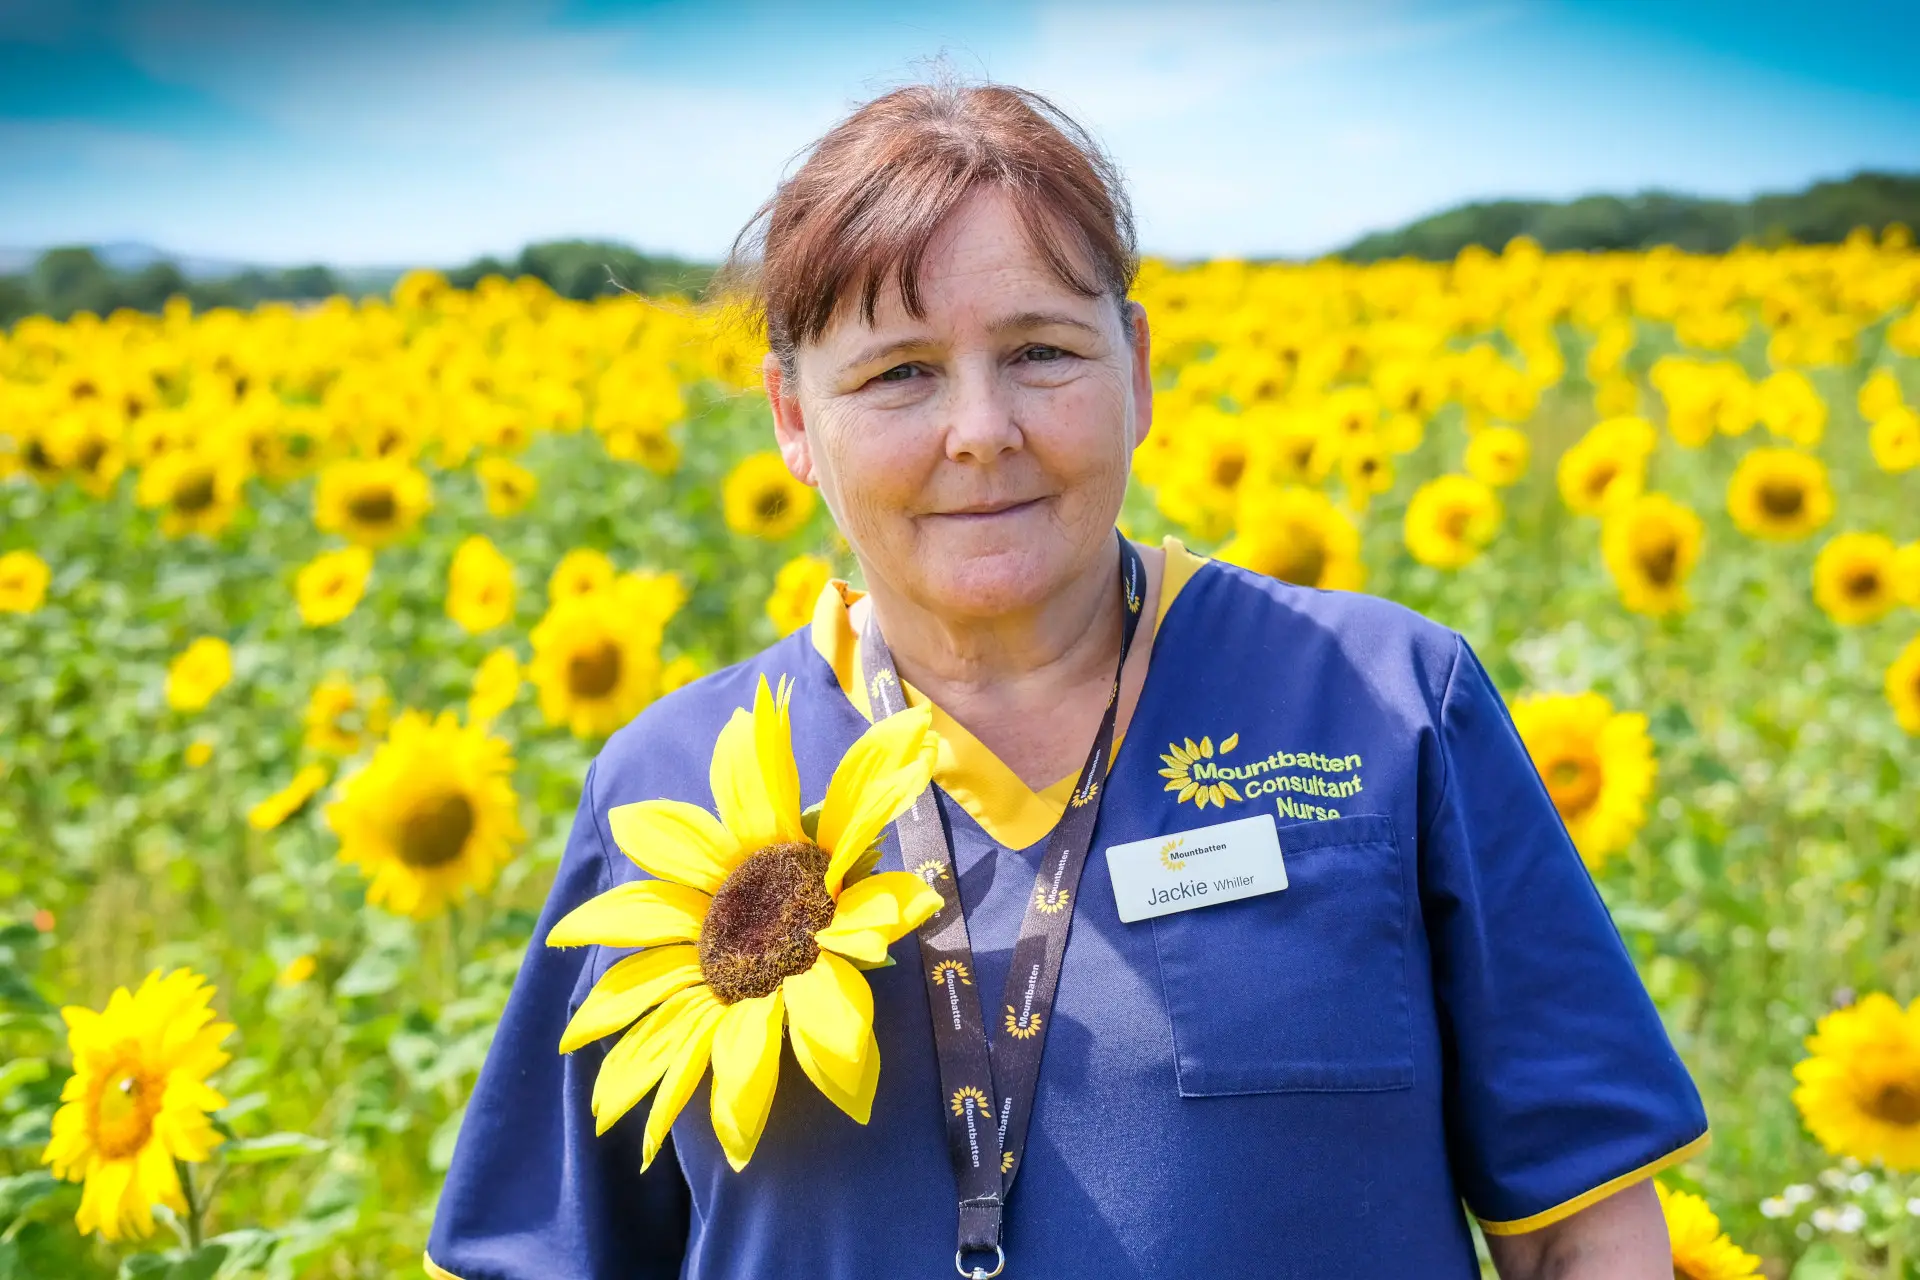 mountbatten nurse with sunflower